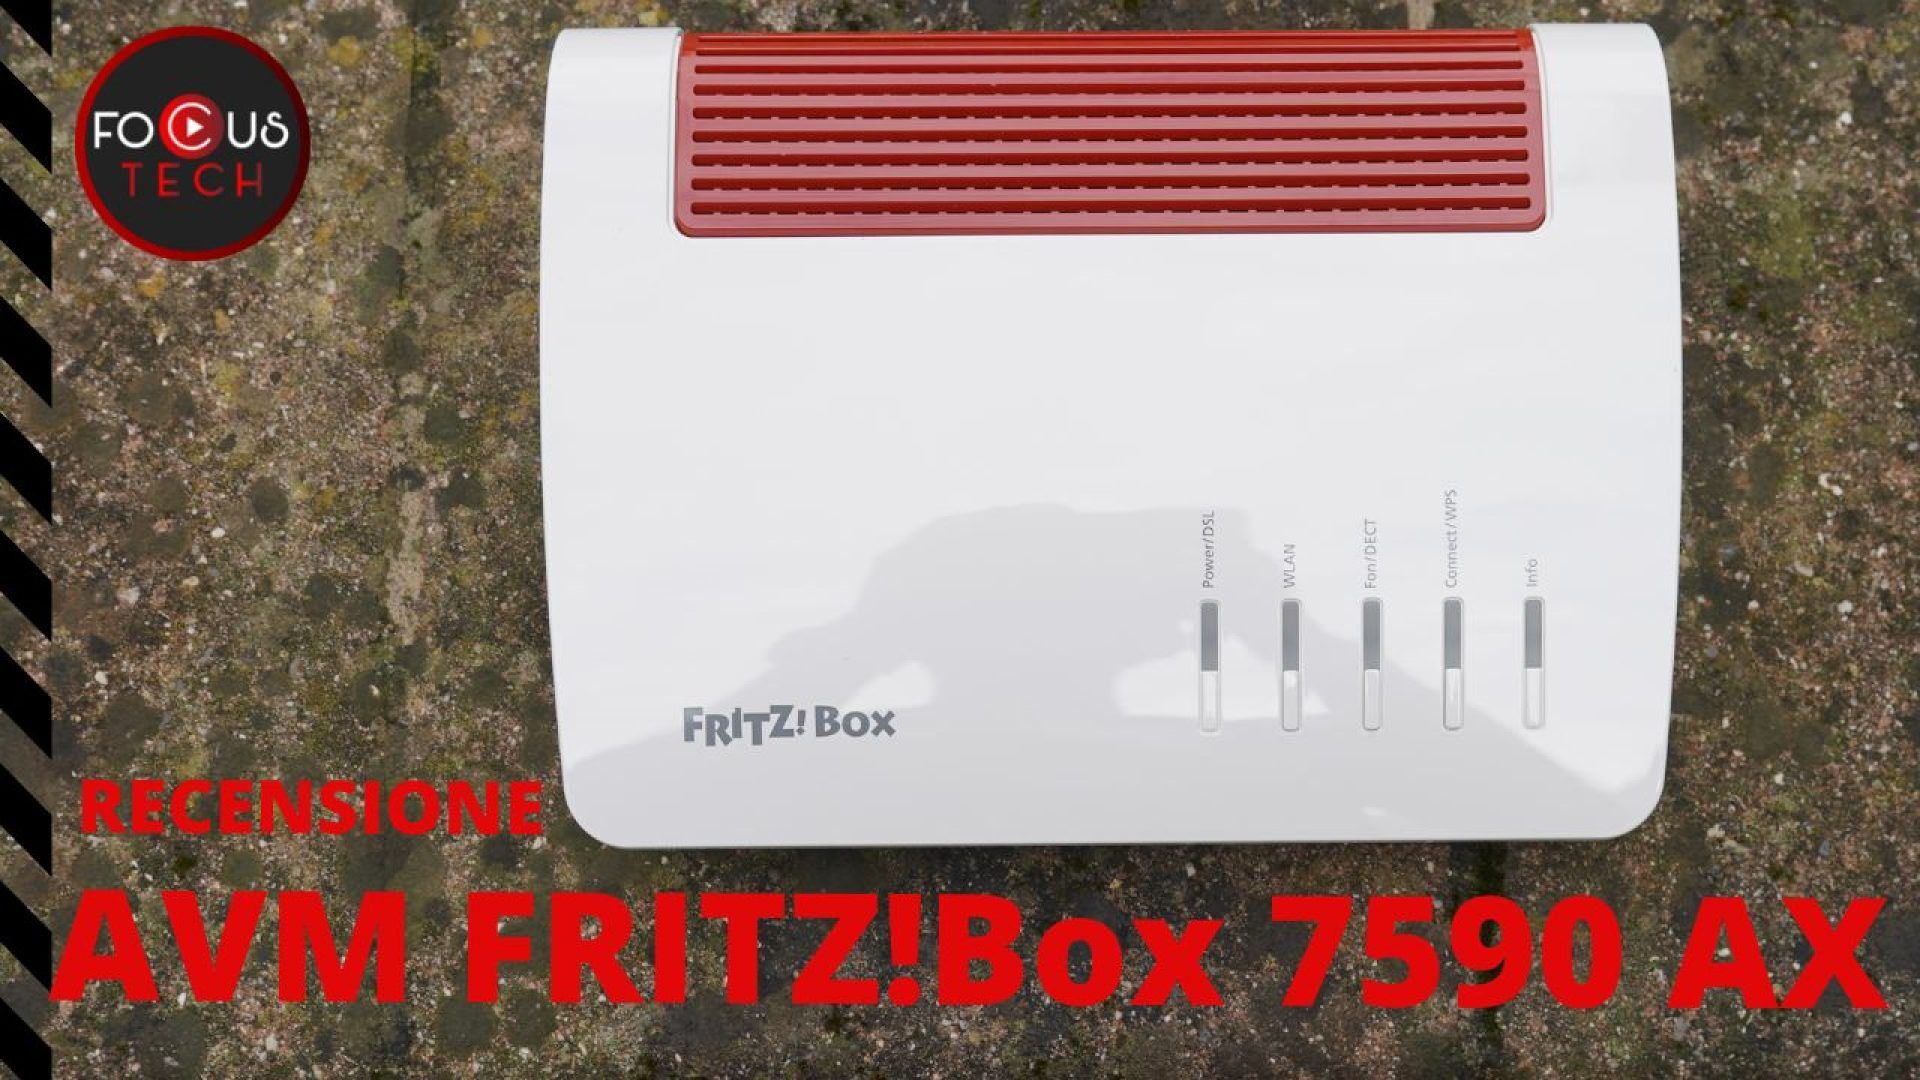 AVM FRITZ!Box 7590 AX